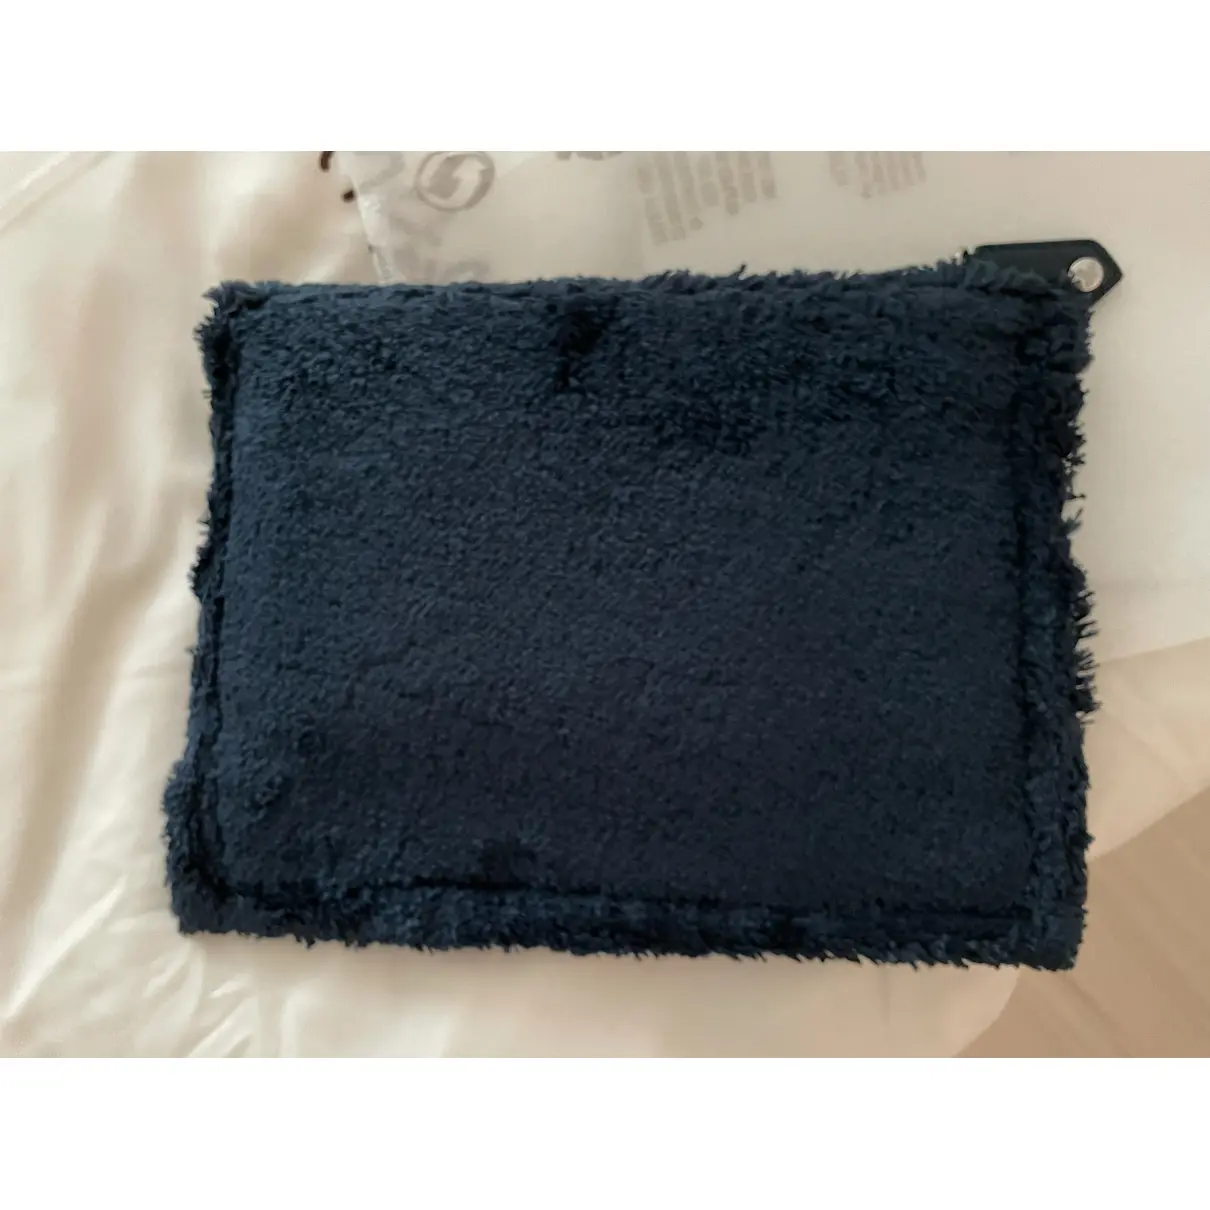 Buy Vivienne Westwood Cloth clutch bag online